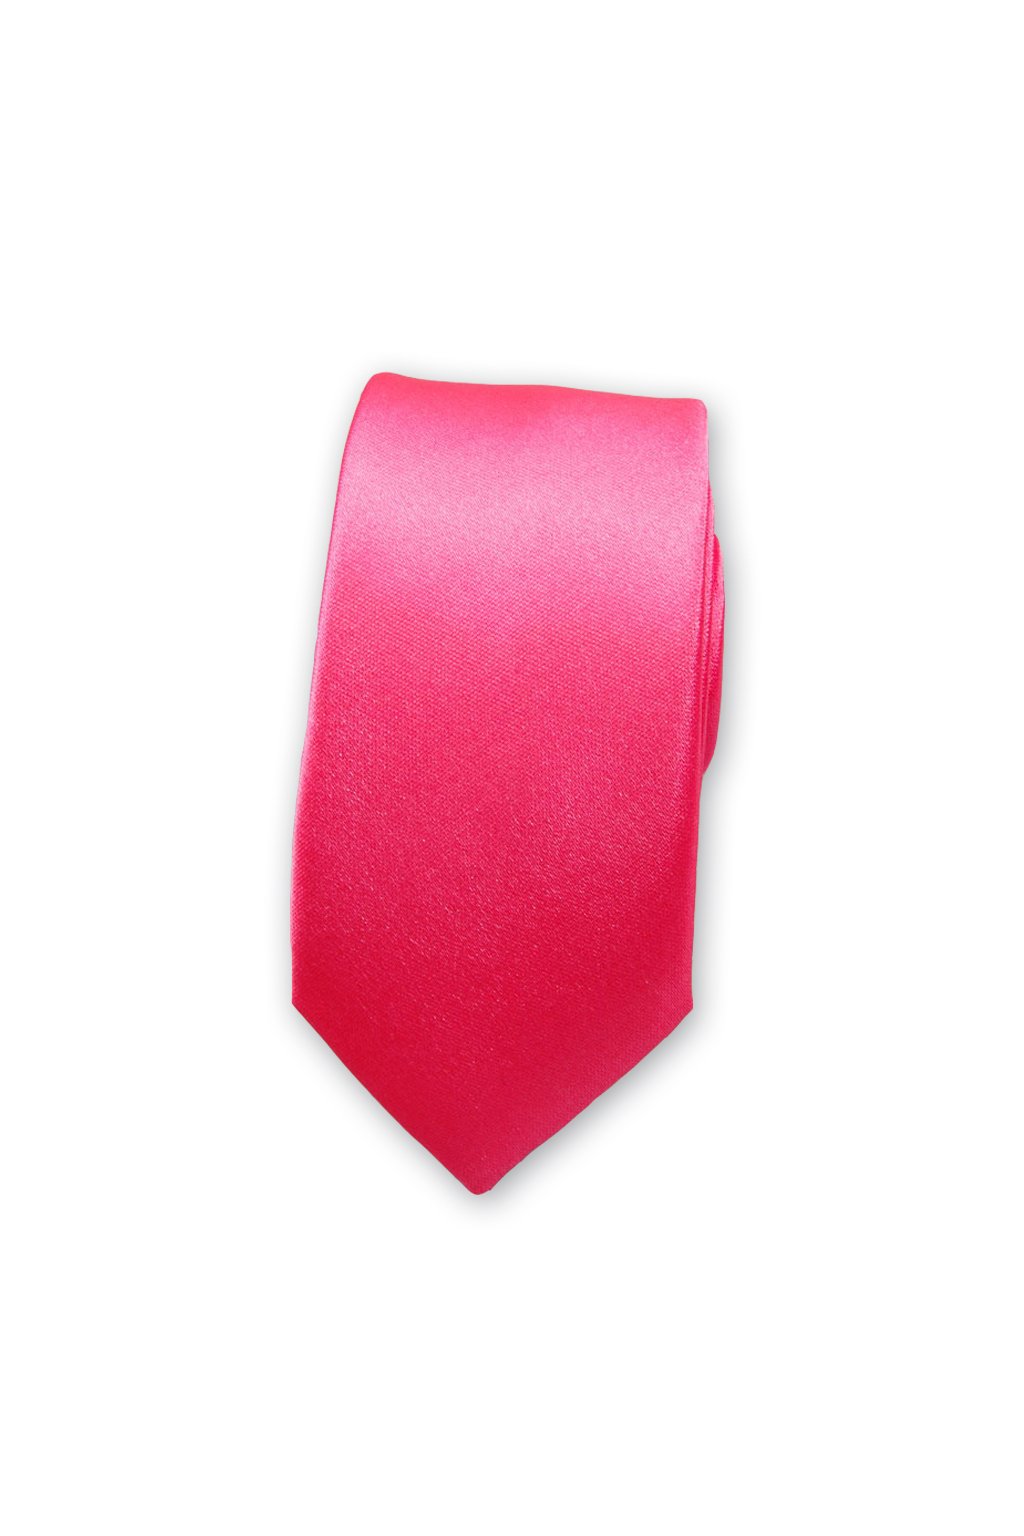 Úzká kravata Avantgard - růžová